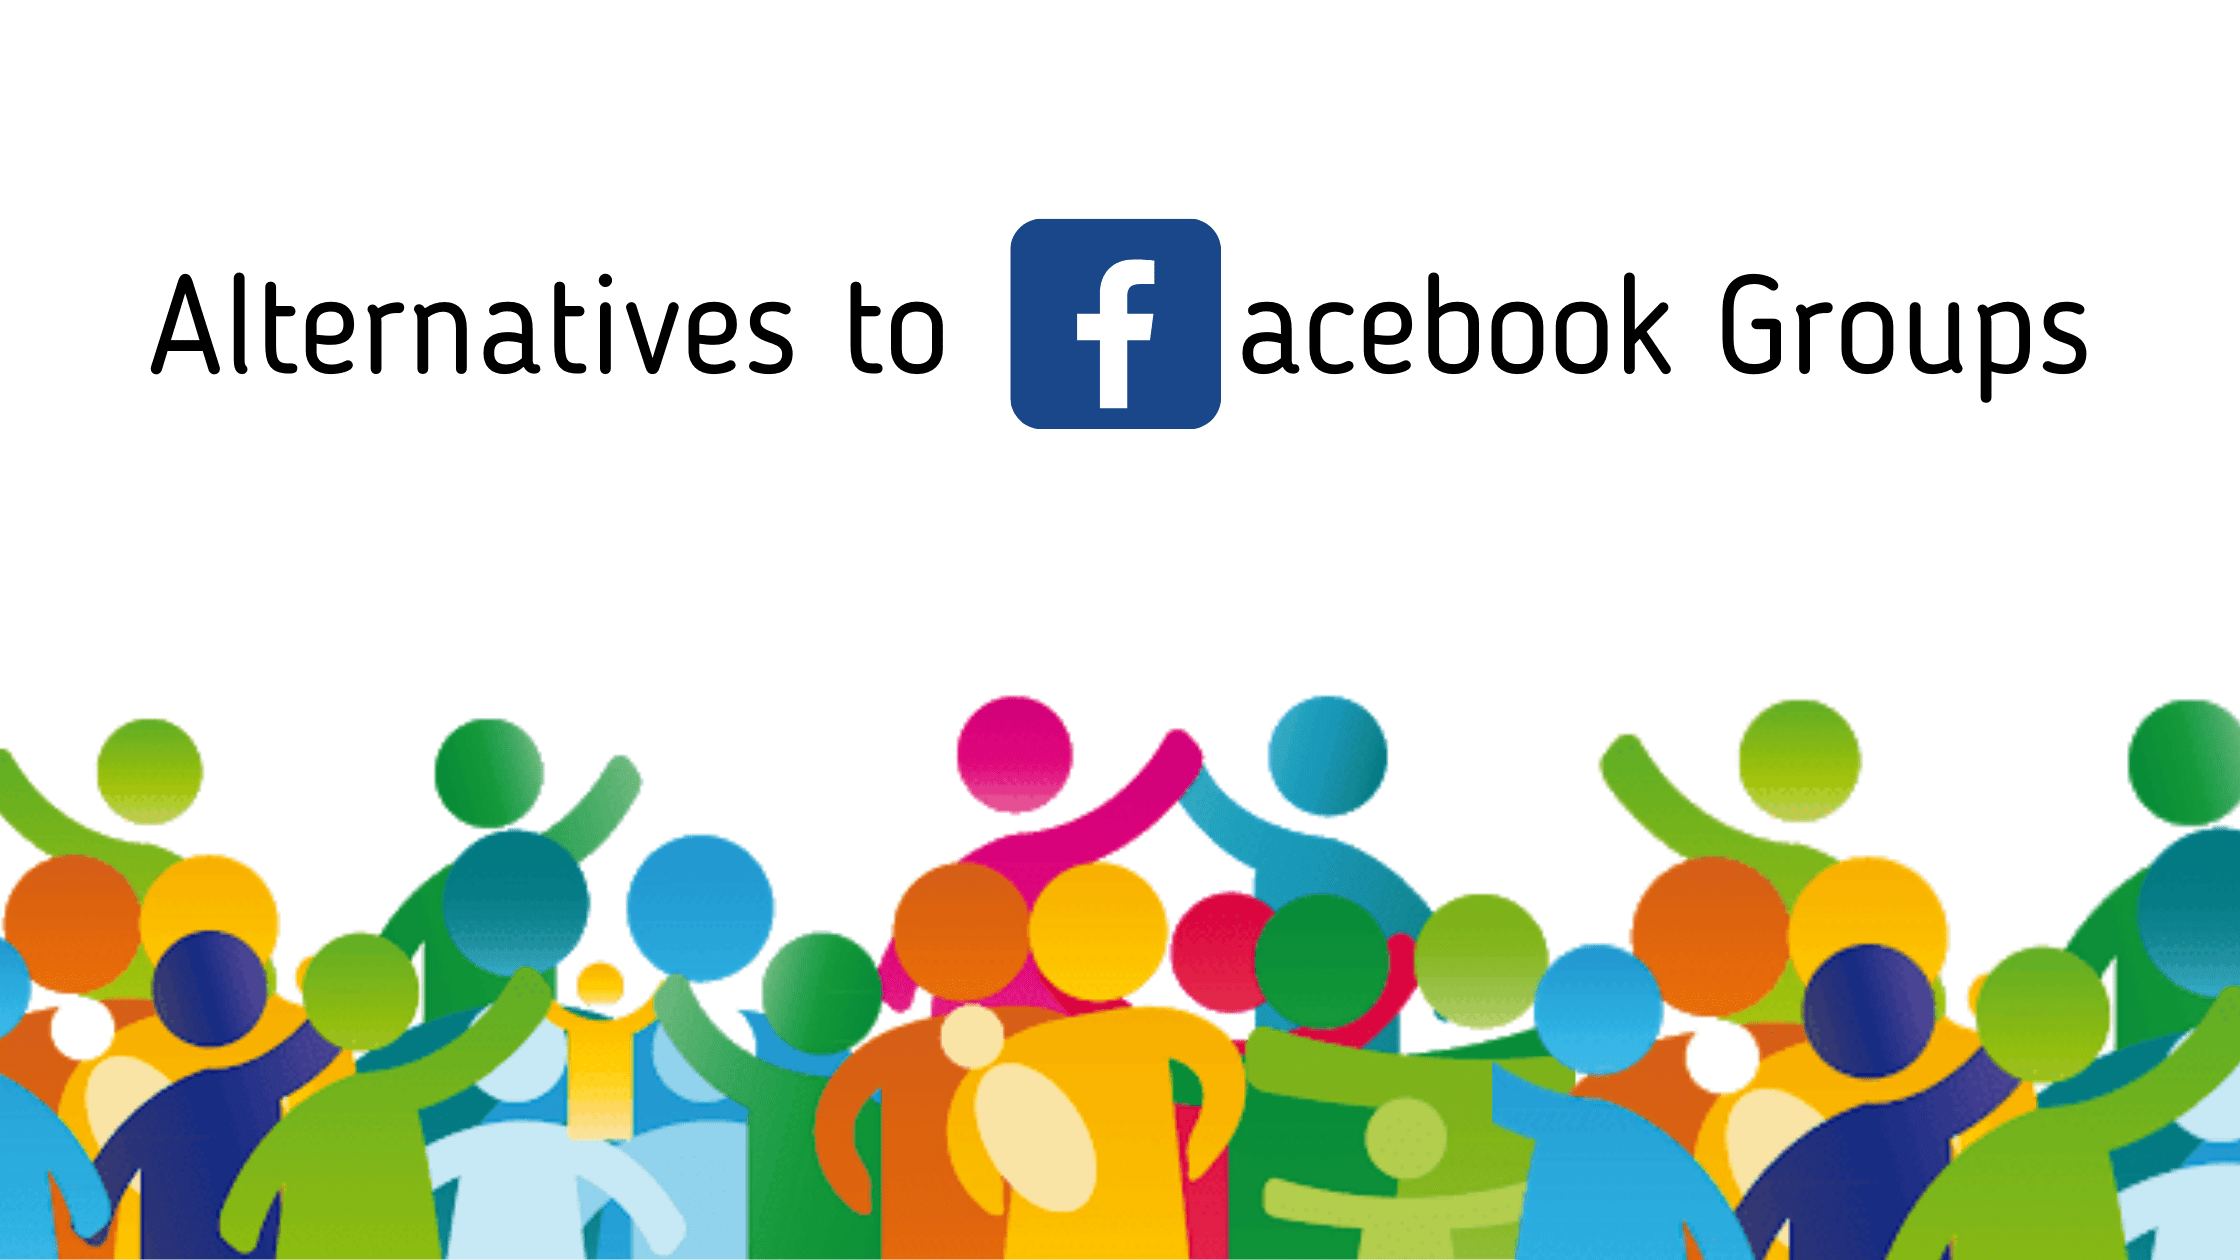 Alternatives to Facebook Groups